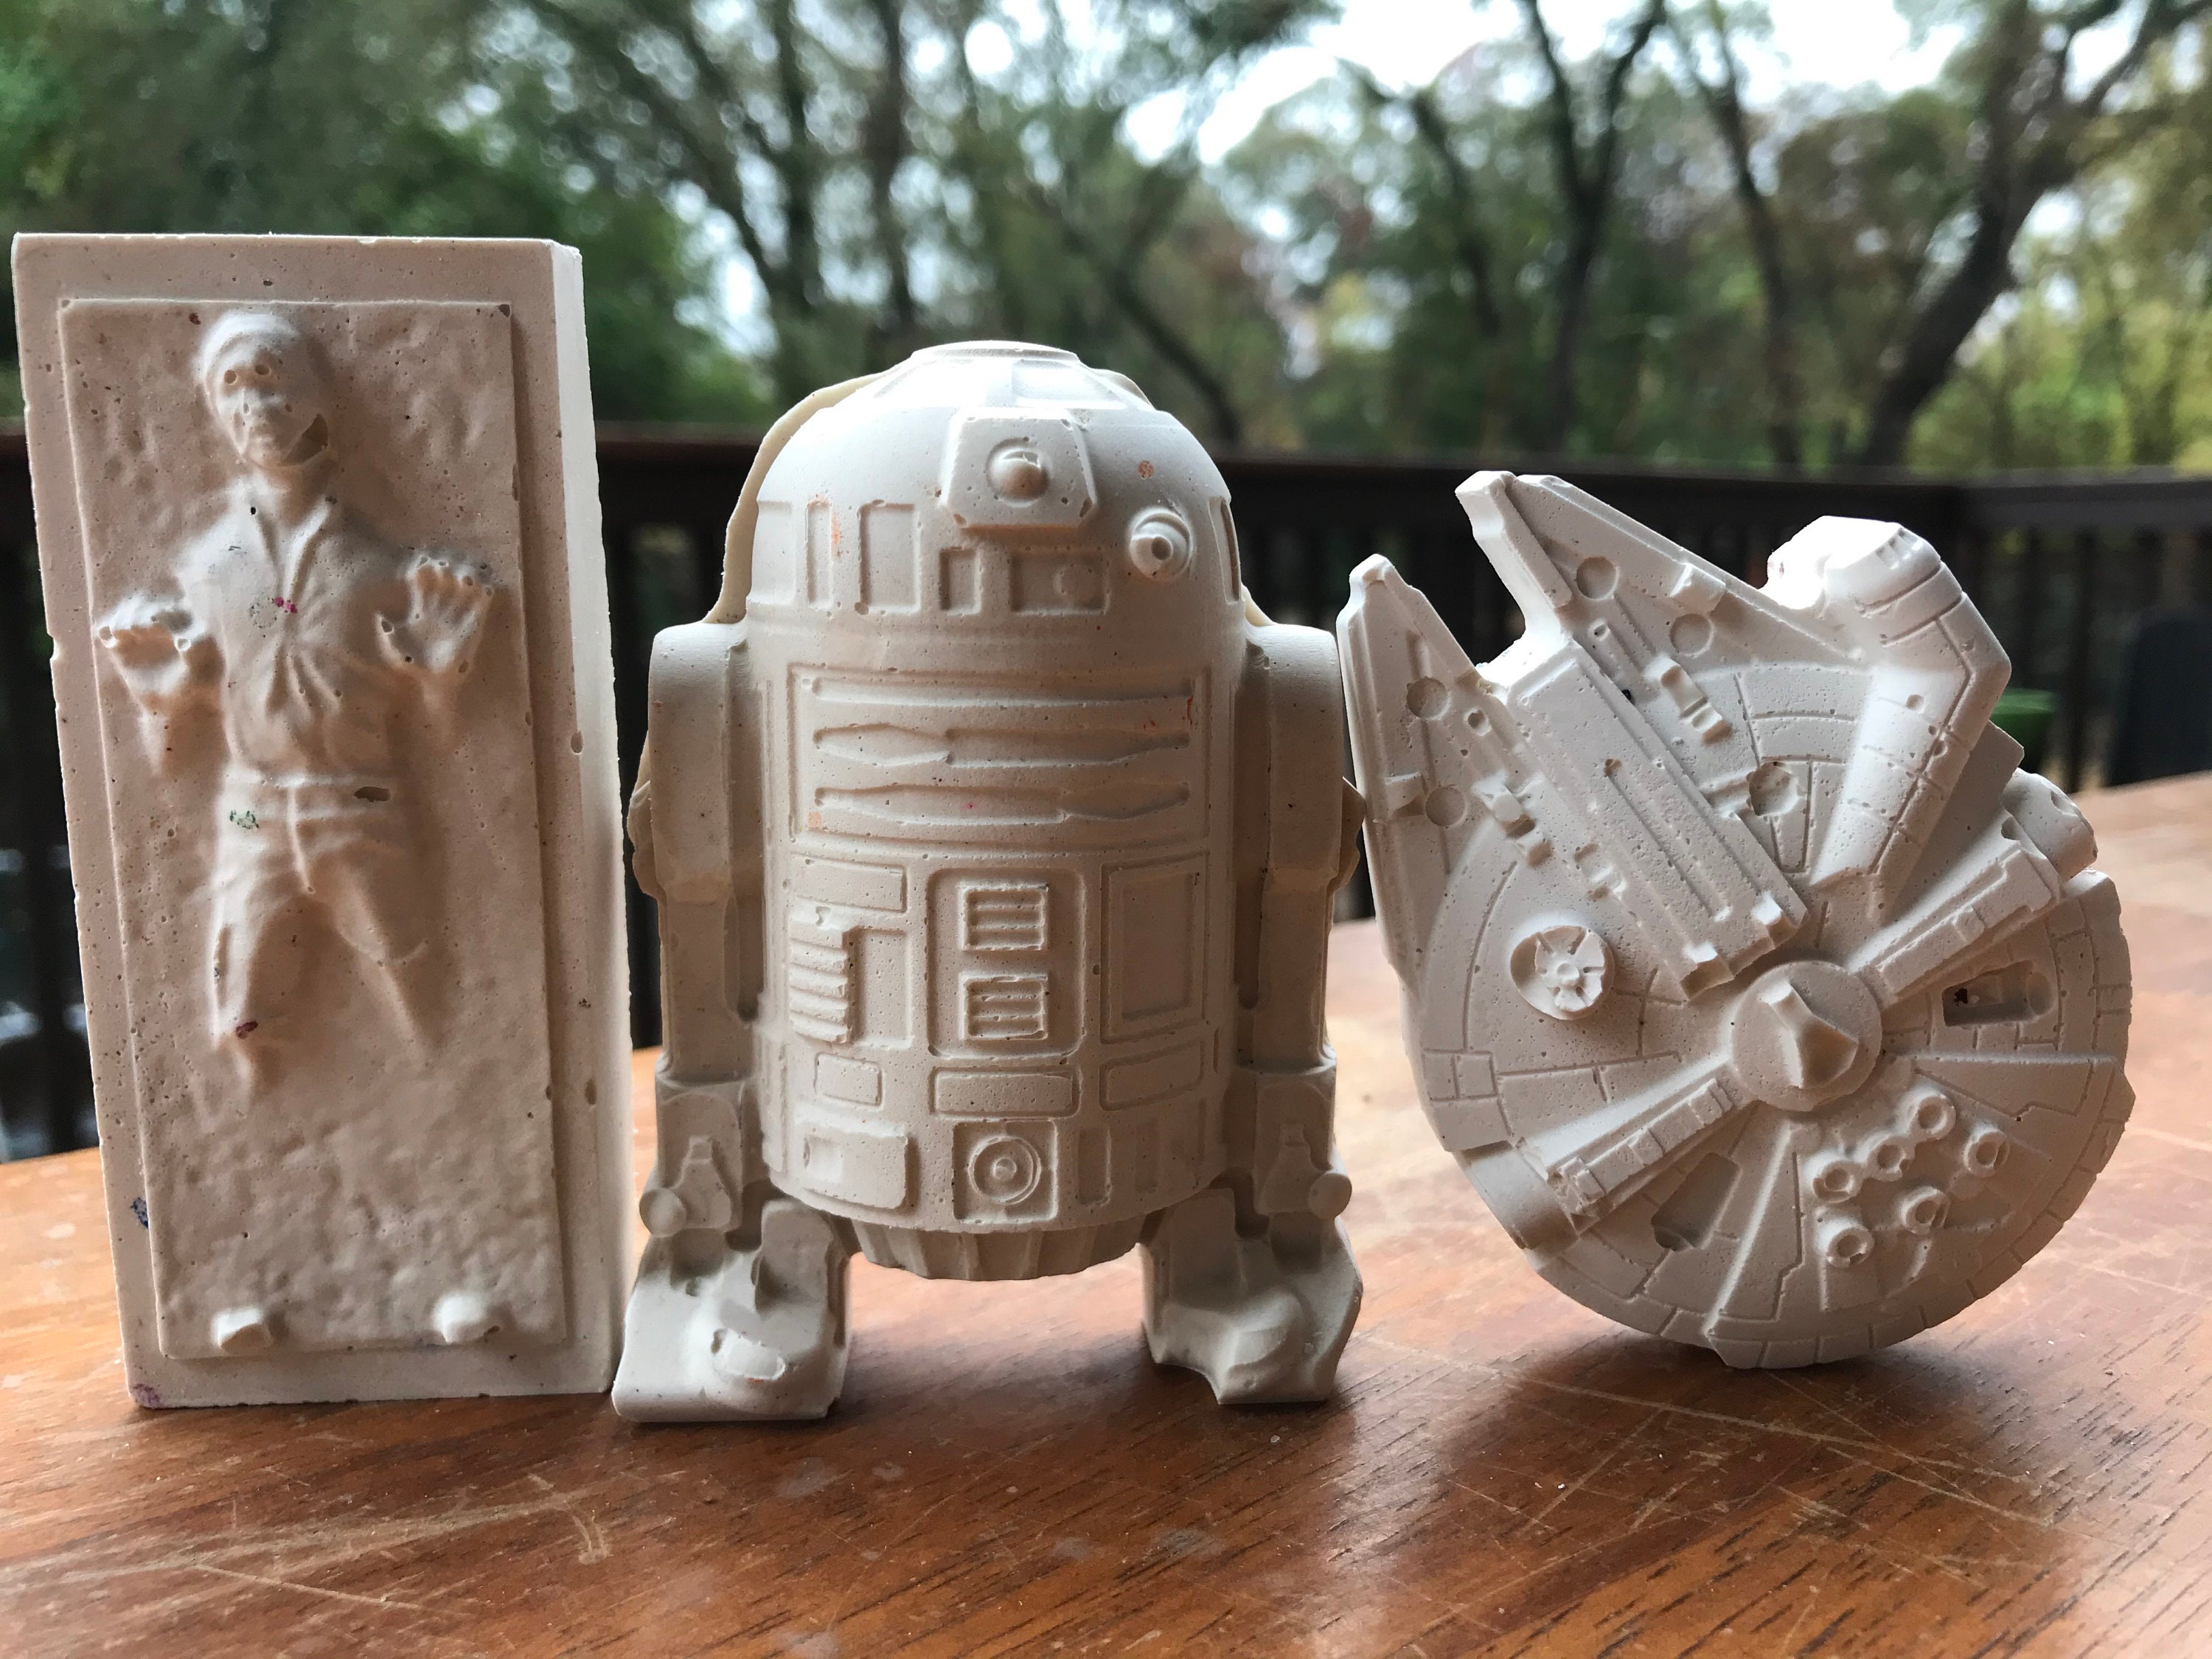 Star Wars Soap Making For Kids